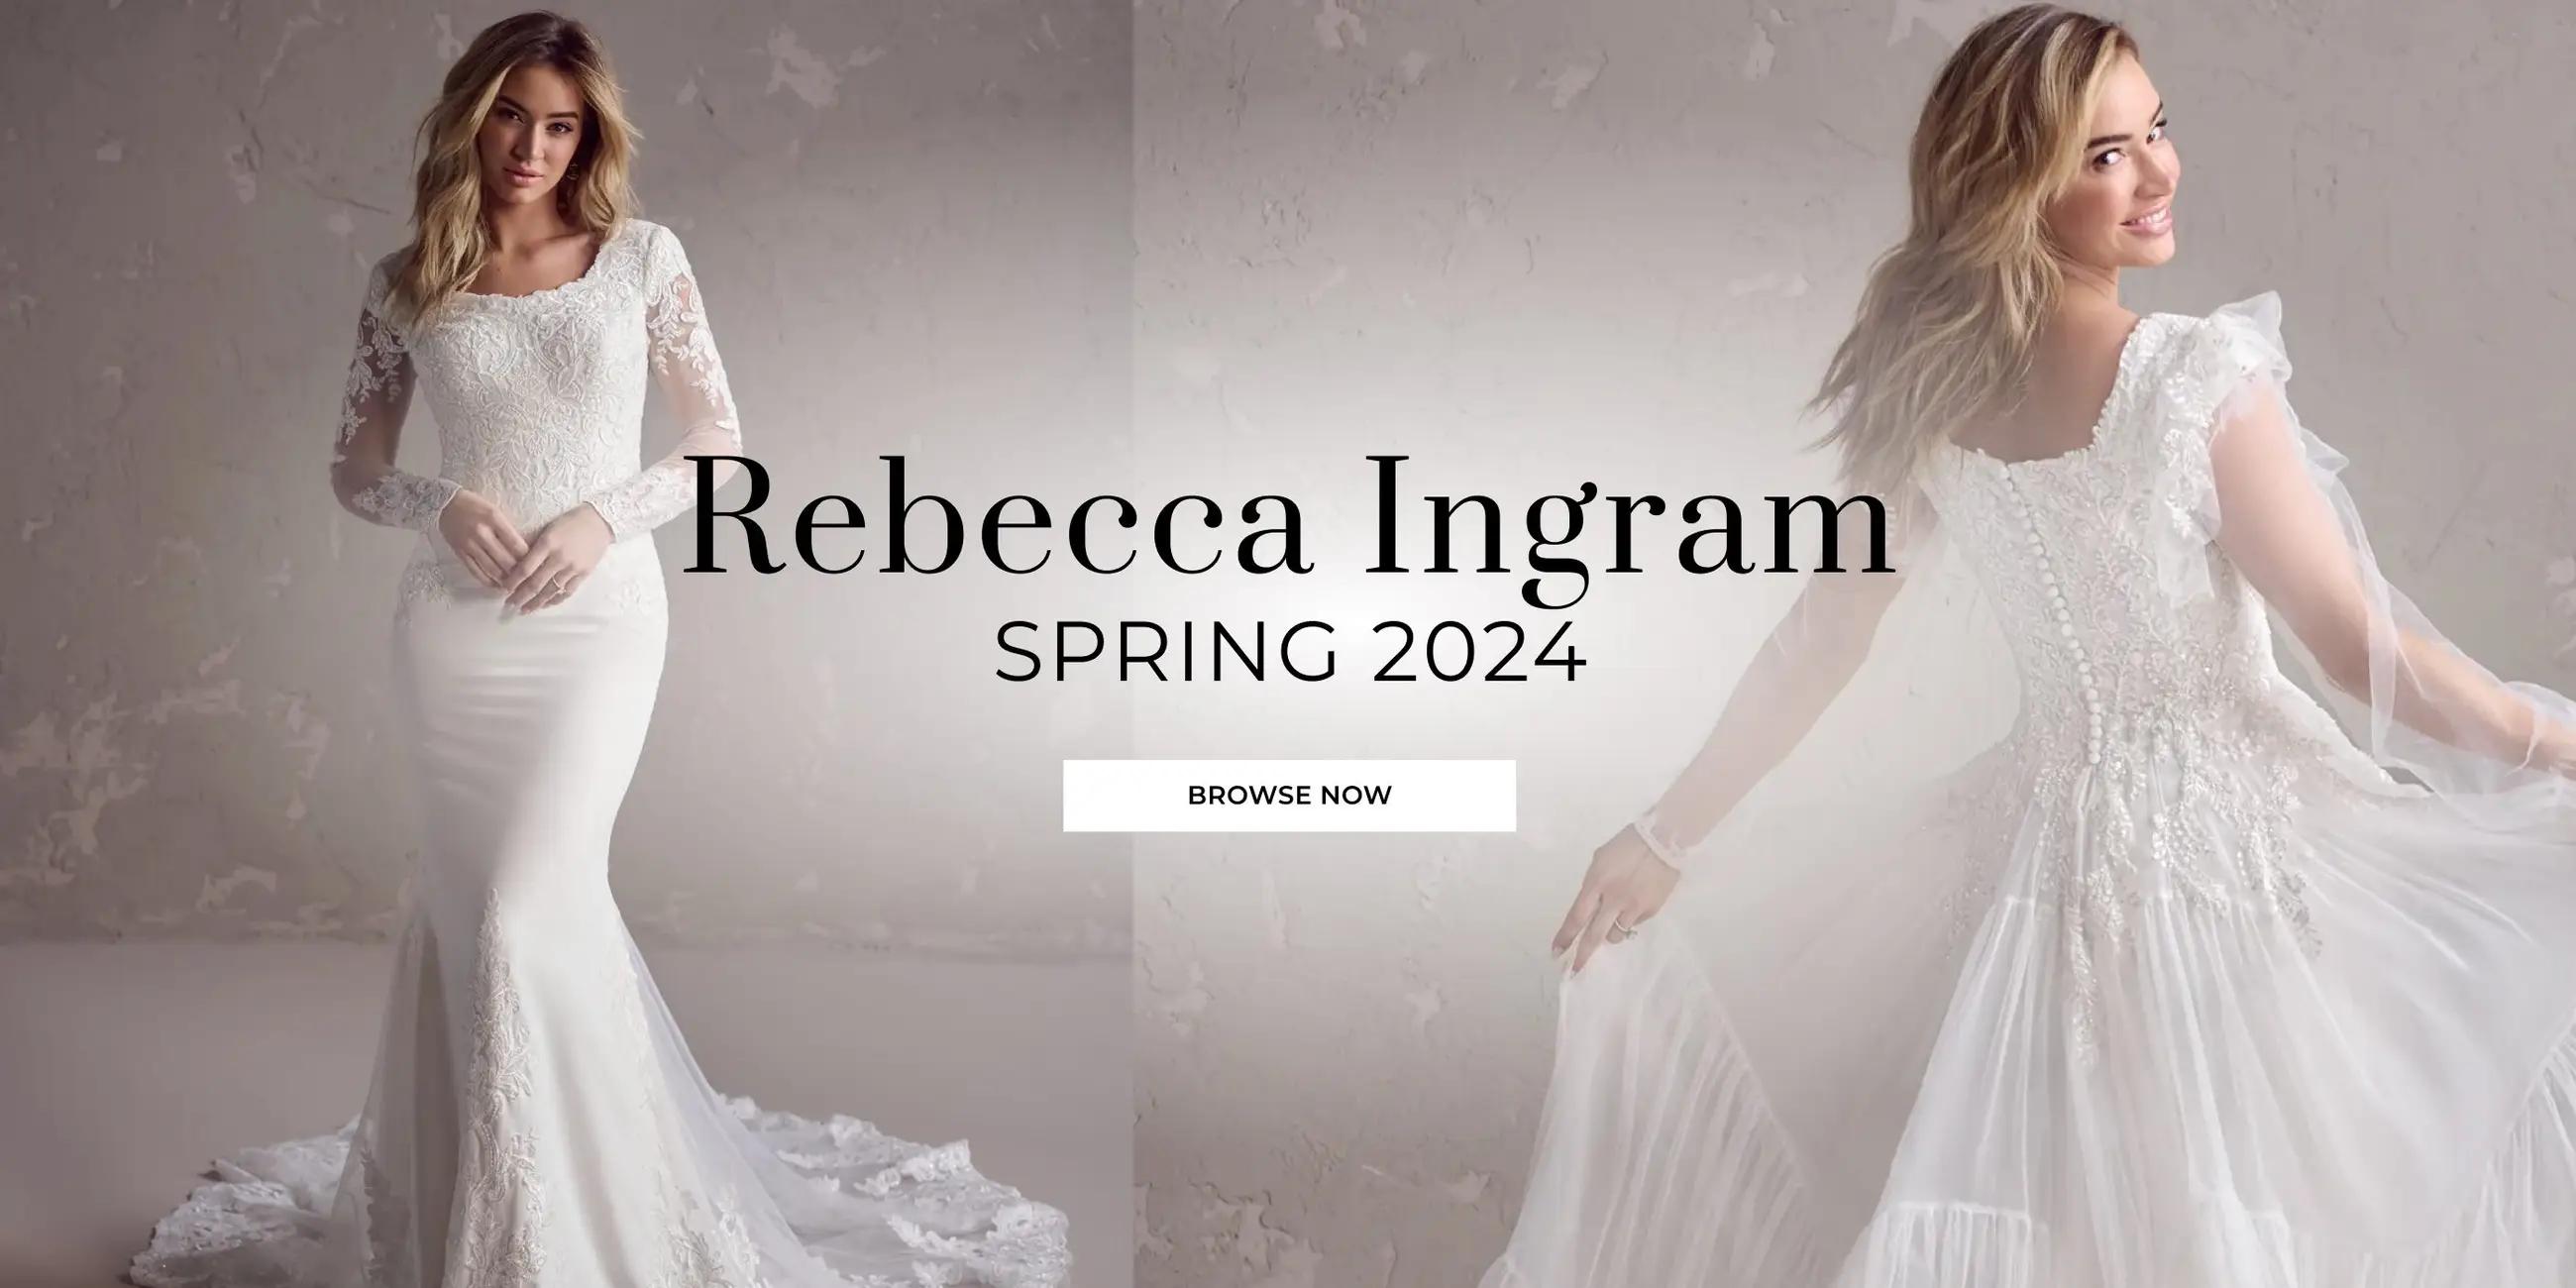 Rebecca Ingram Spring 2024 banner desktop